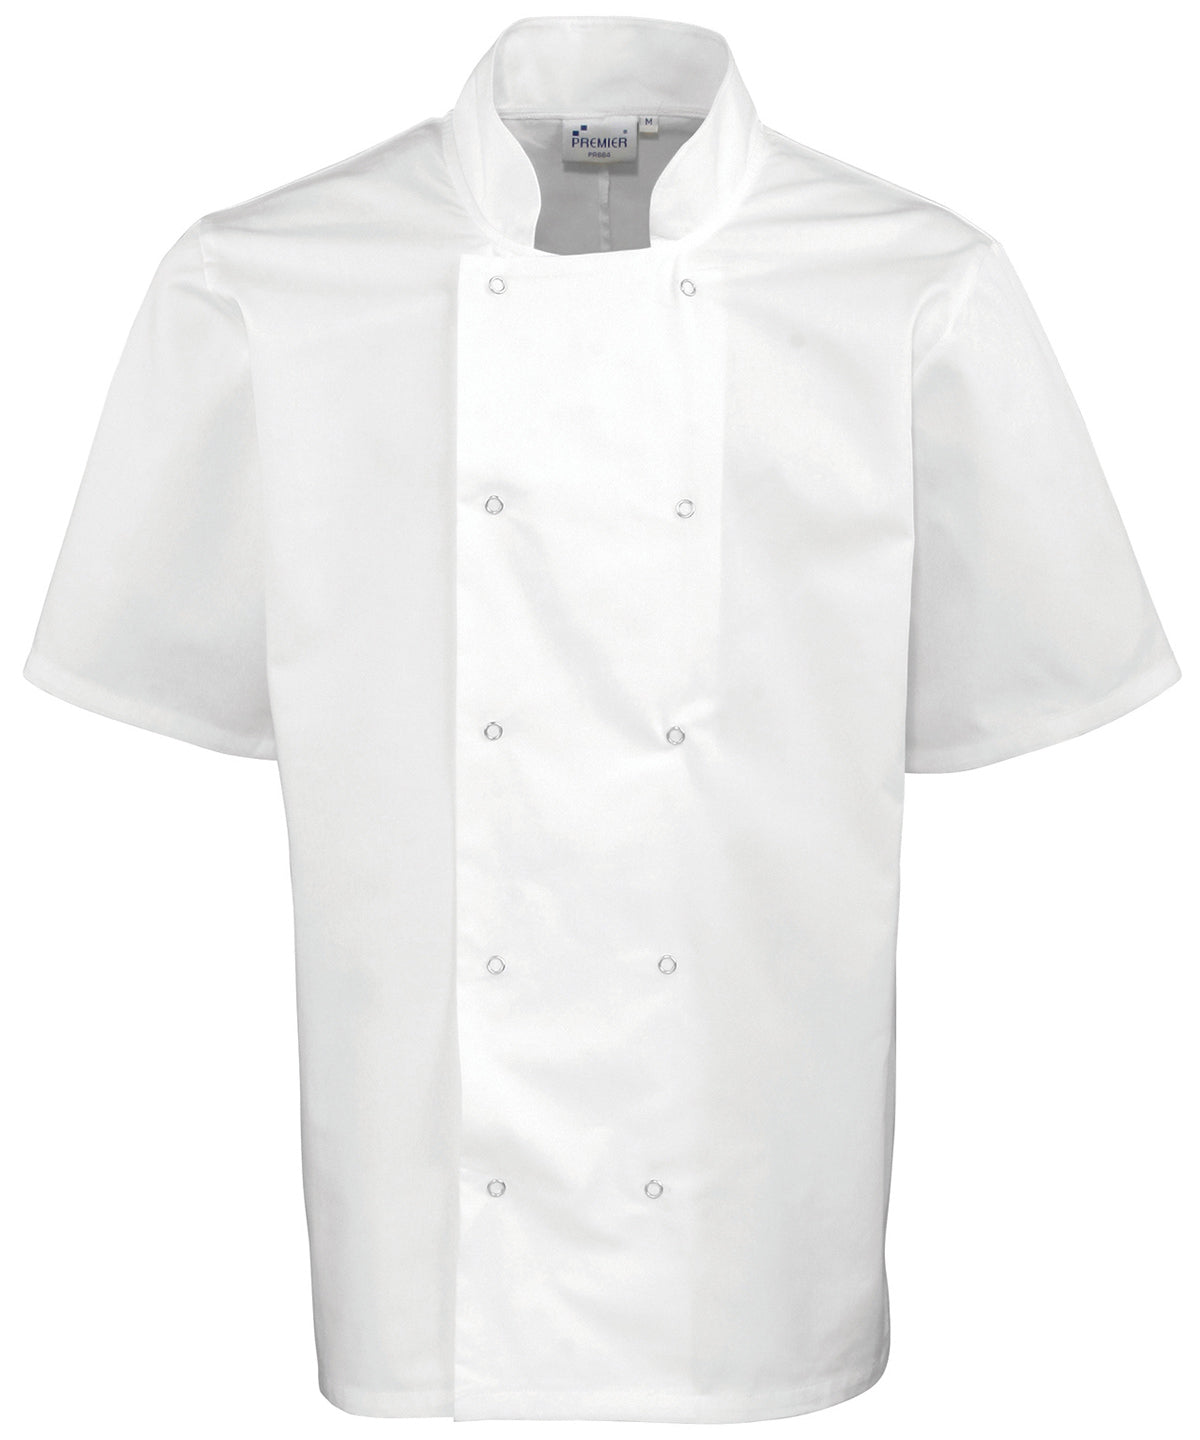 Premier Studded front short sleeve chef's jacket